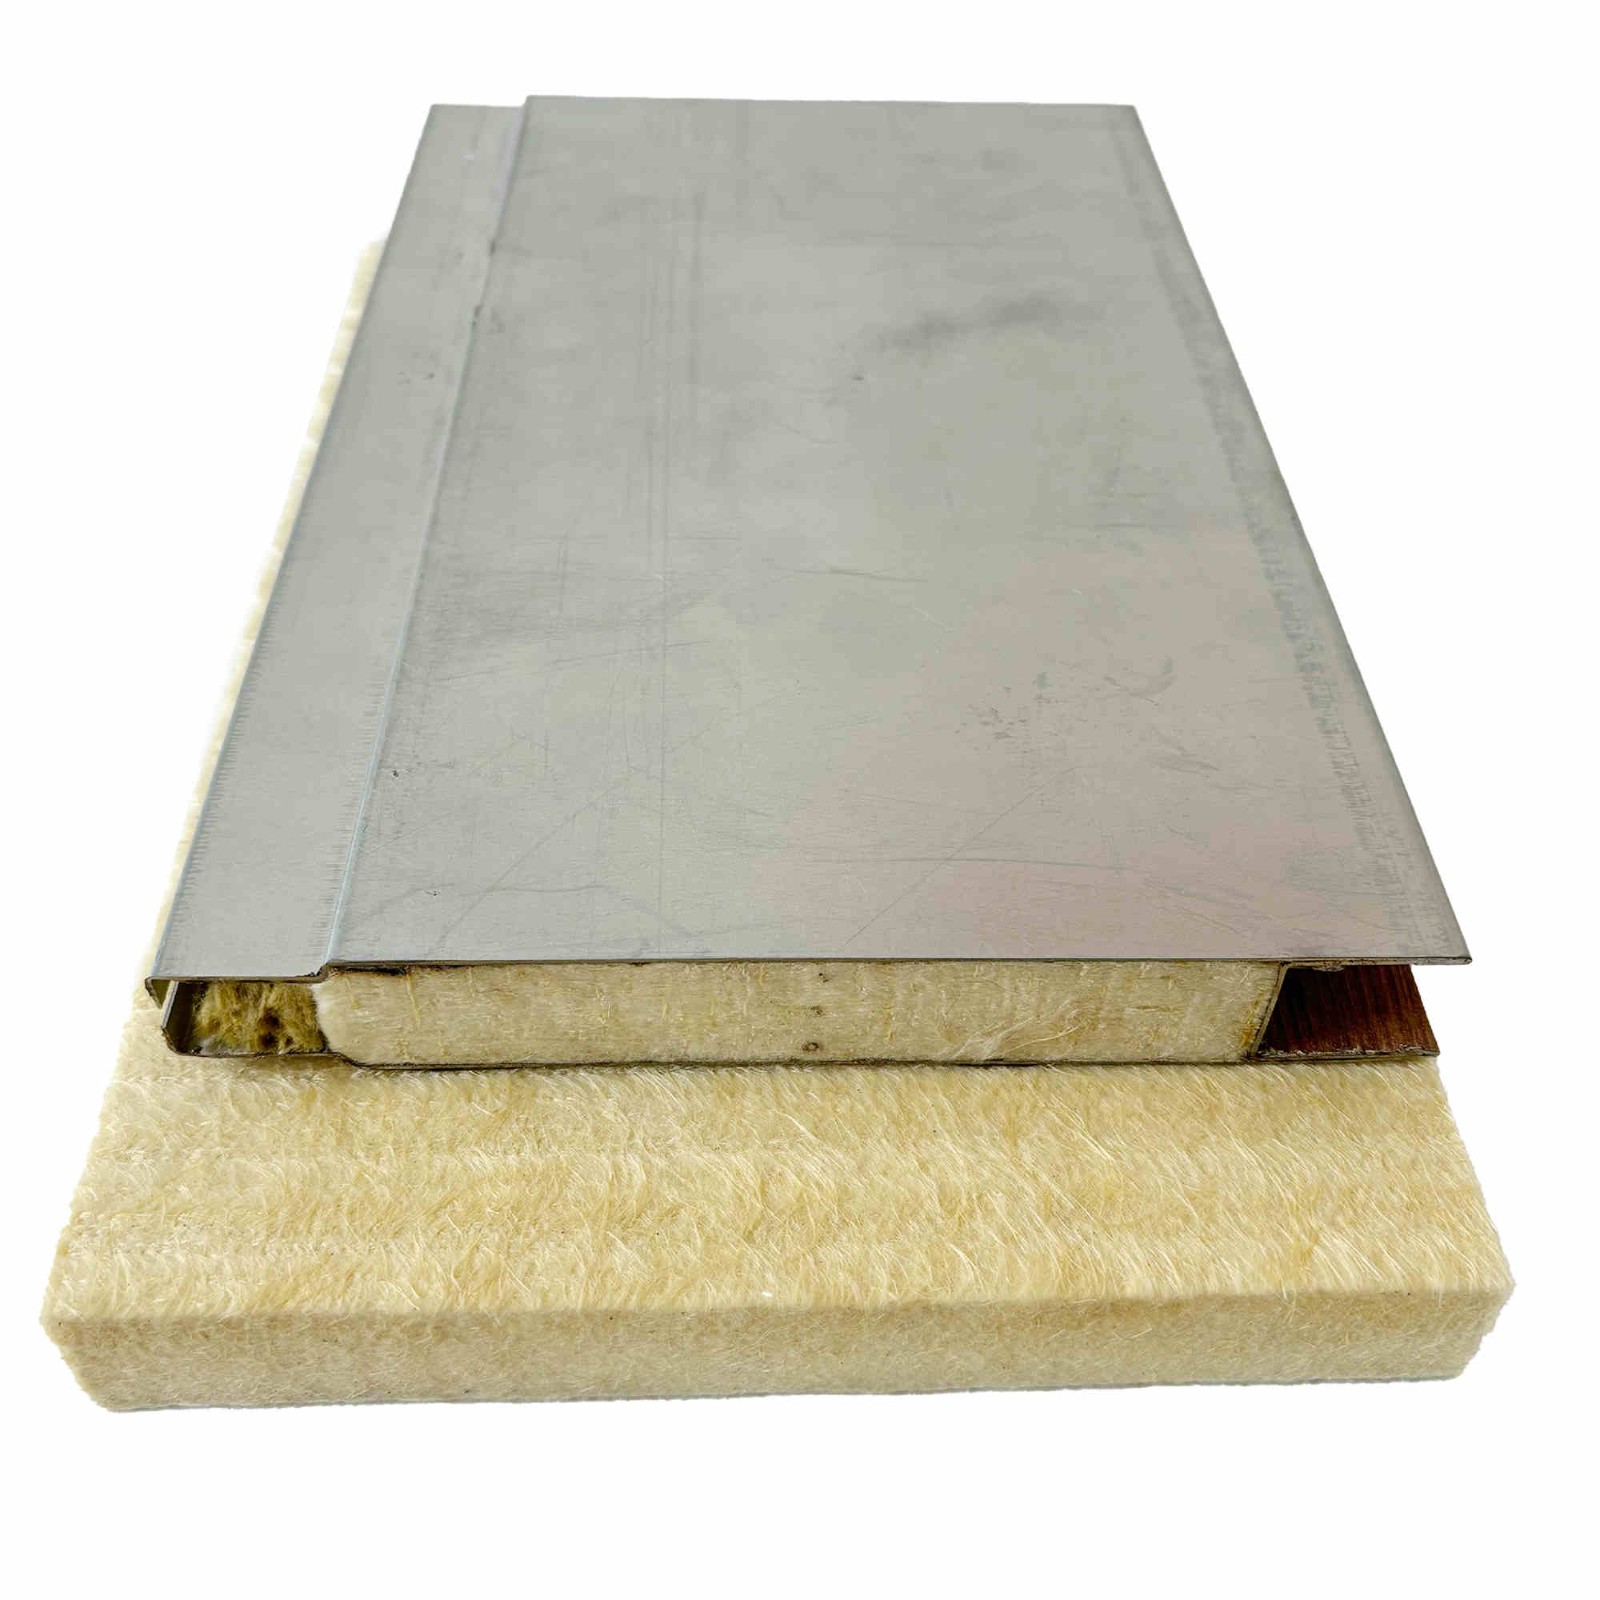 Fireproof insulation board